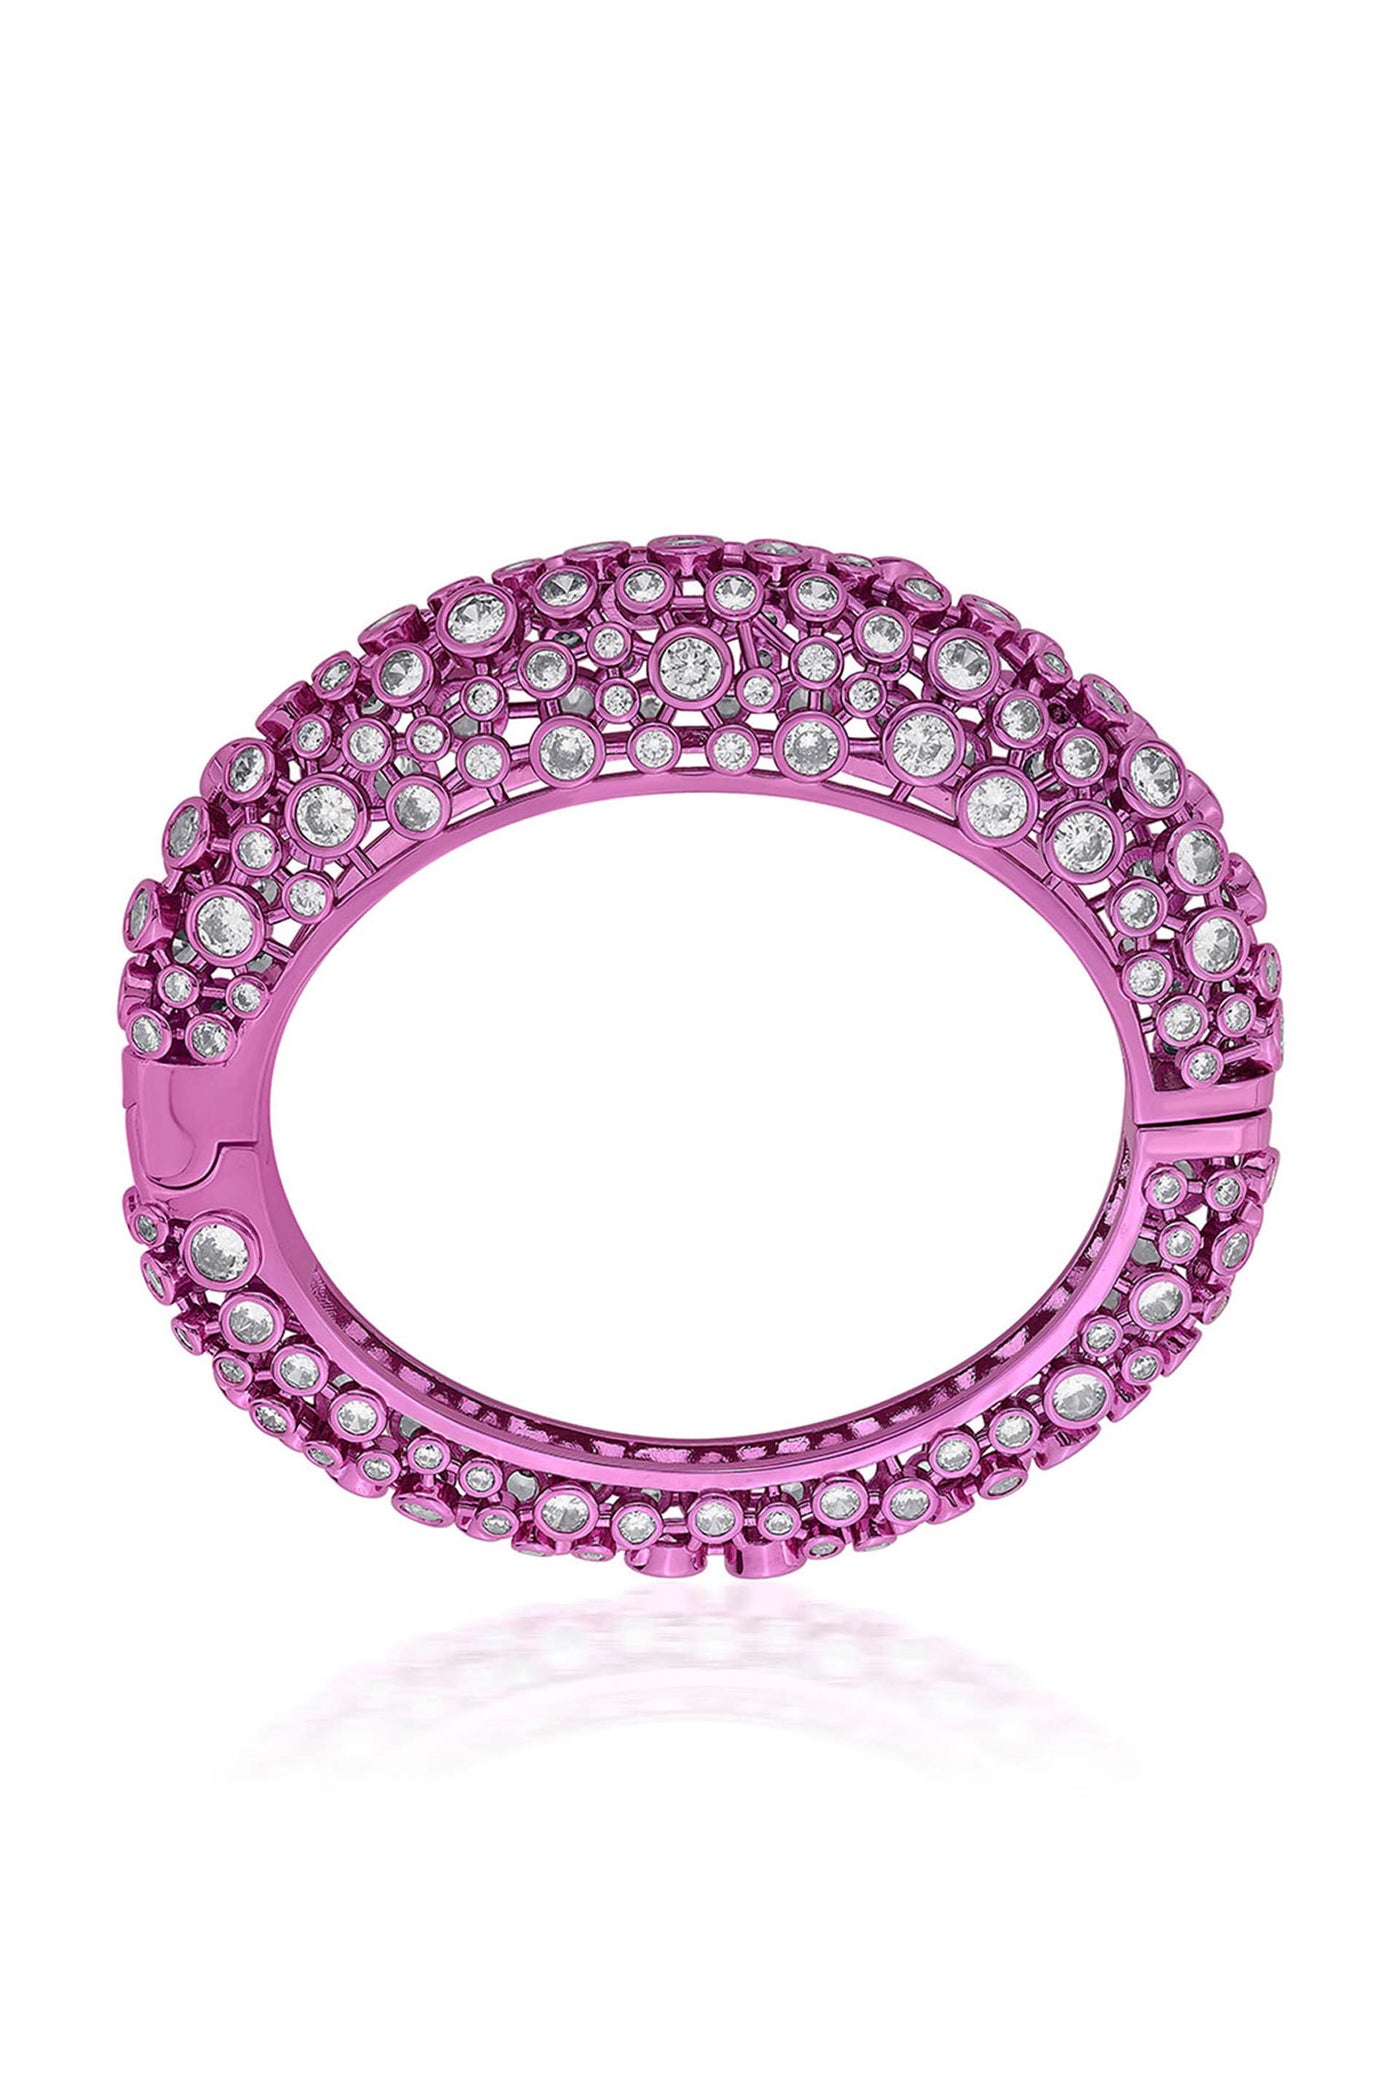 Isharya Rani Pink Oval Hinge Bangle In Colored Plating fashion jewellery online shopping melange singapore indian designer wear